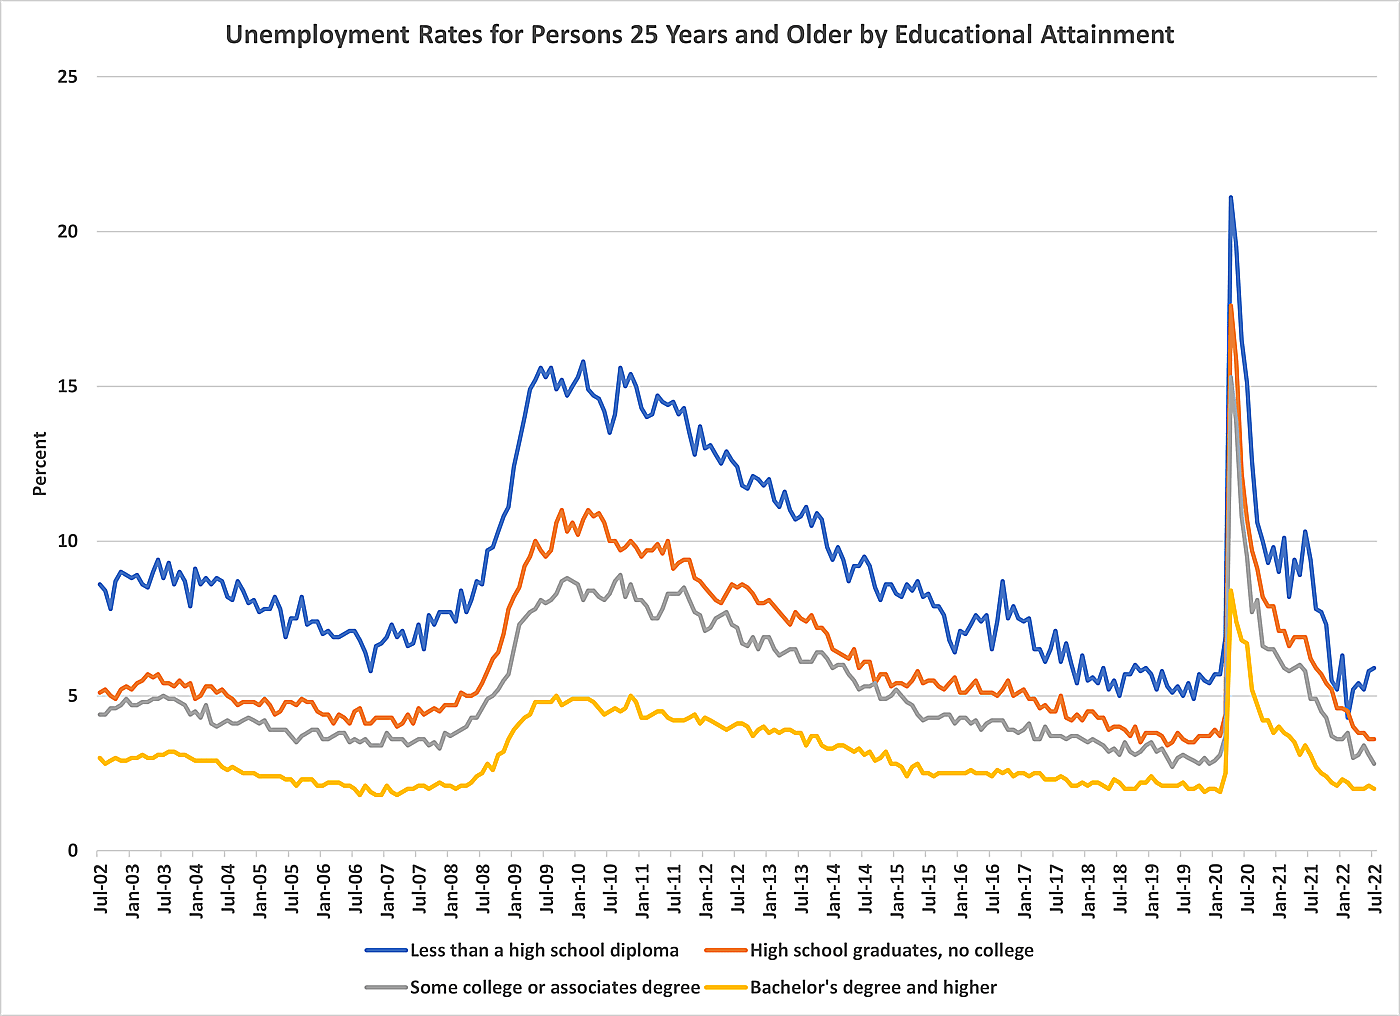 Unemployment rates by education level